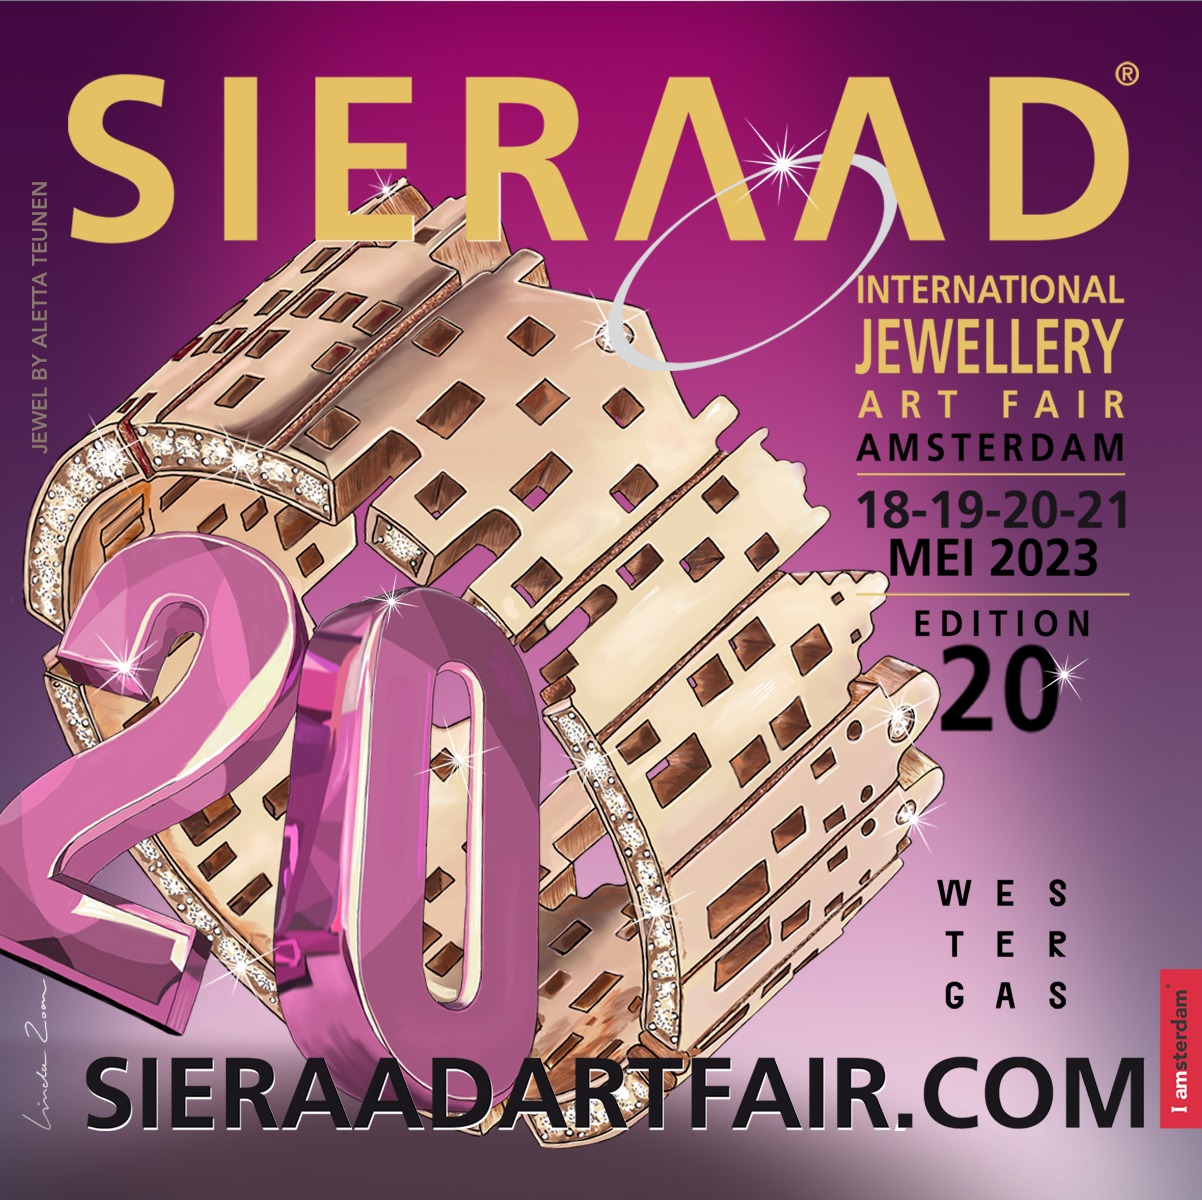 Sieraad Art Fair - Jewellery Art Fair 2023